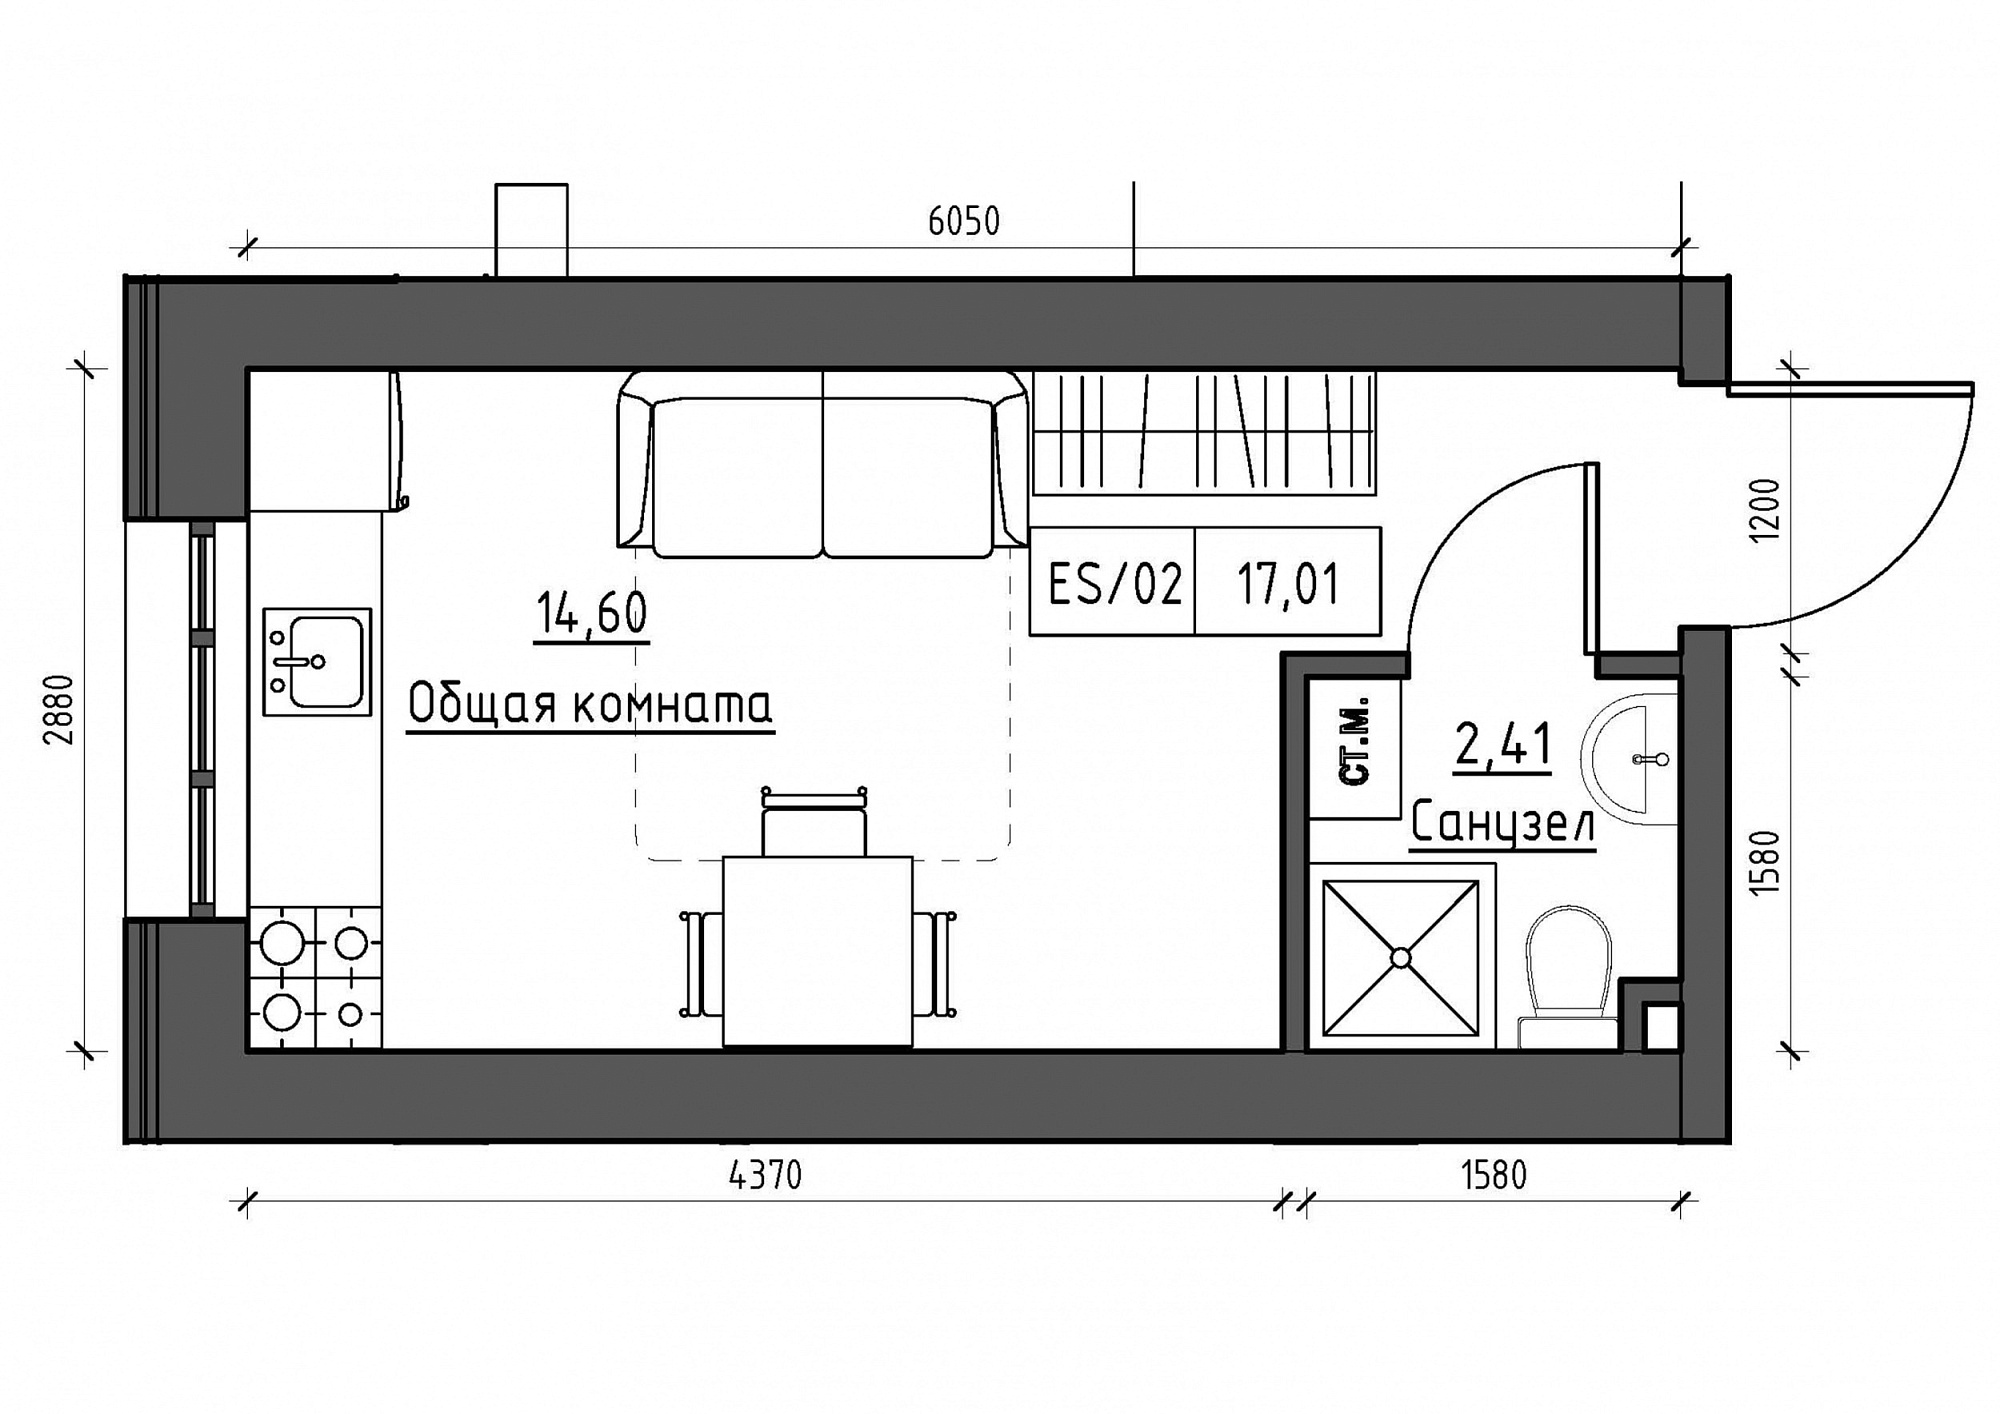 Planning Smart flats area 17.02m2, KS-011-03/0002.